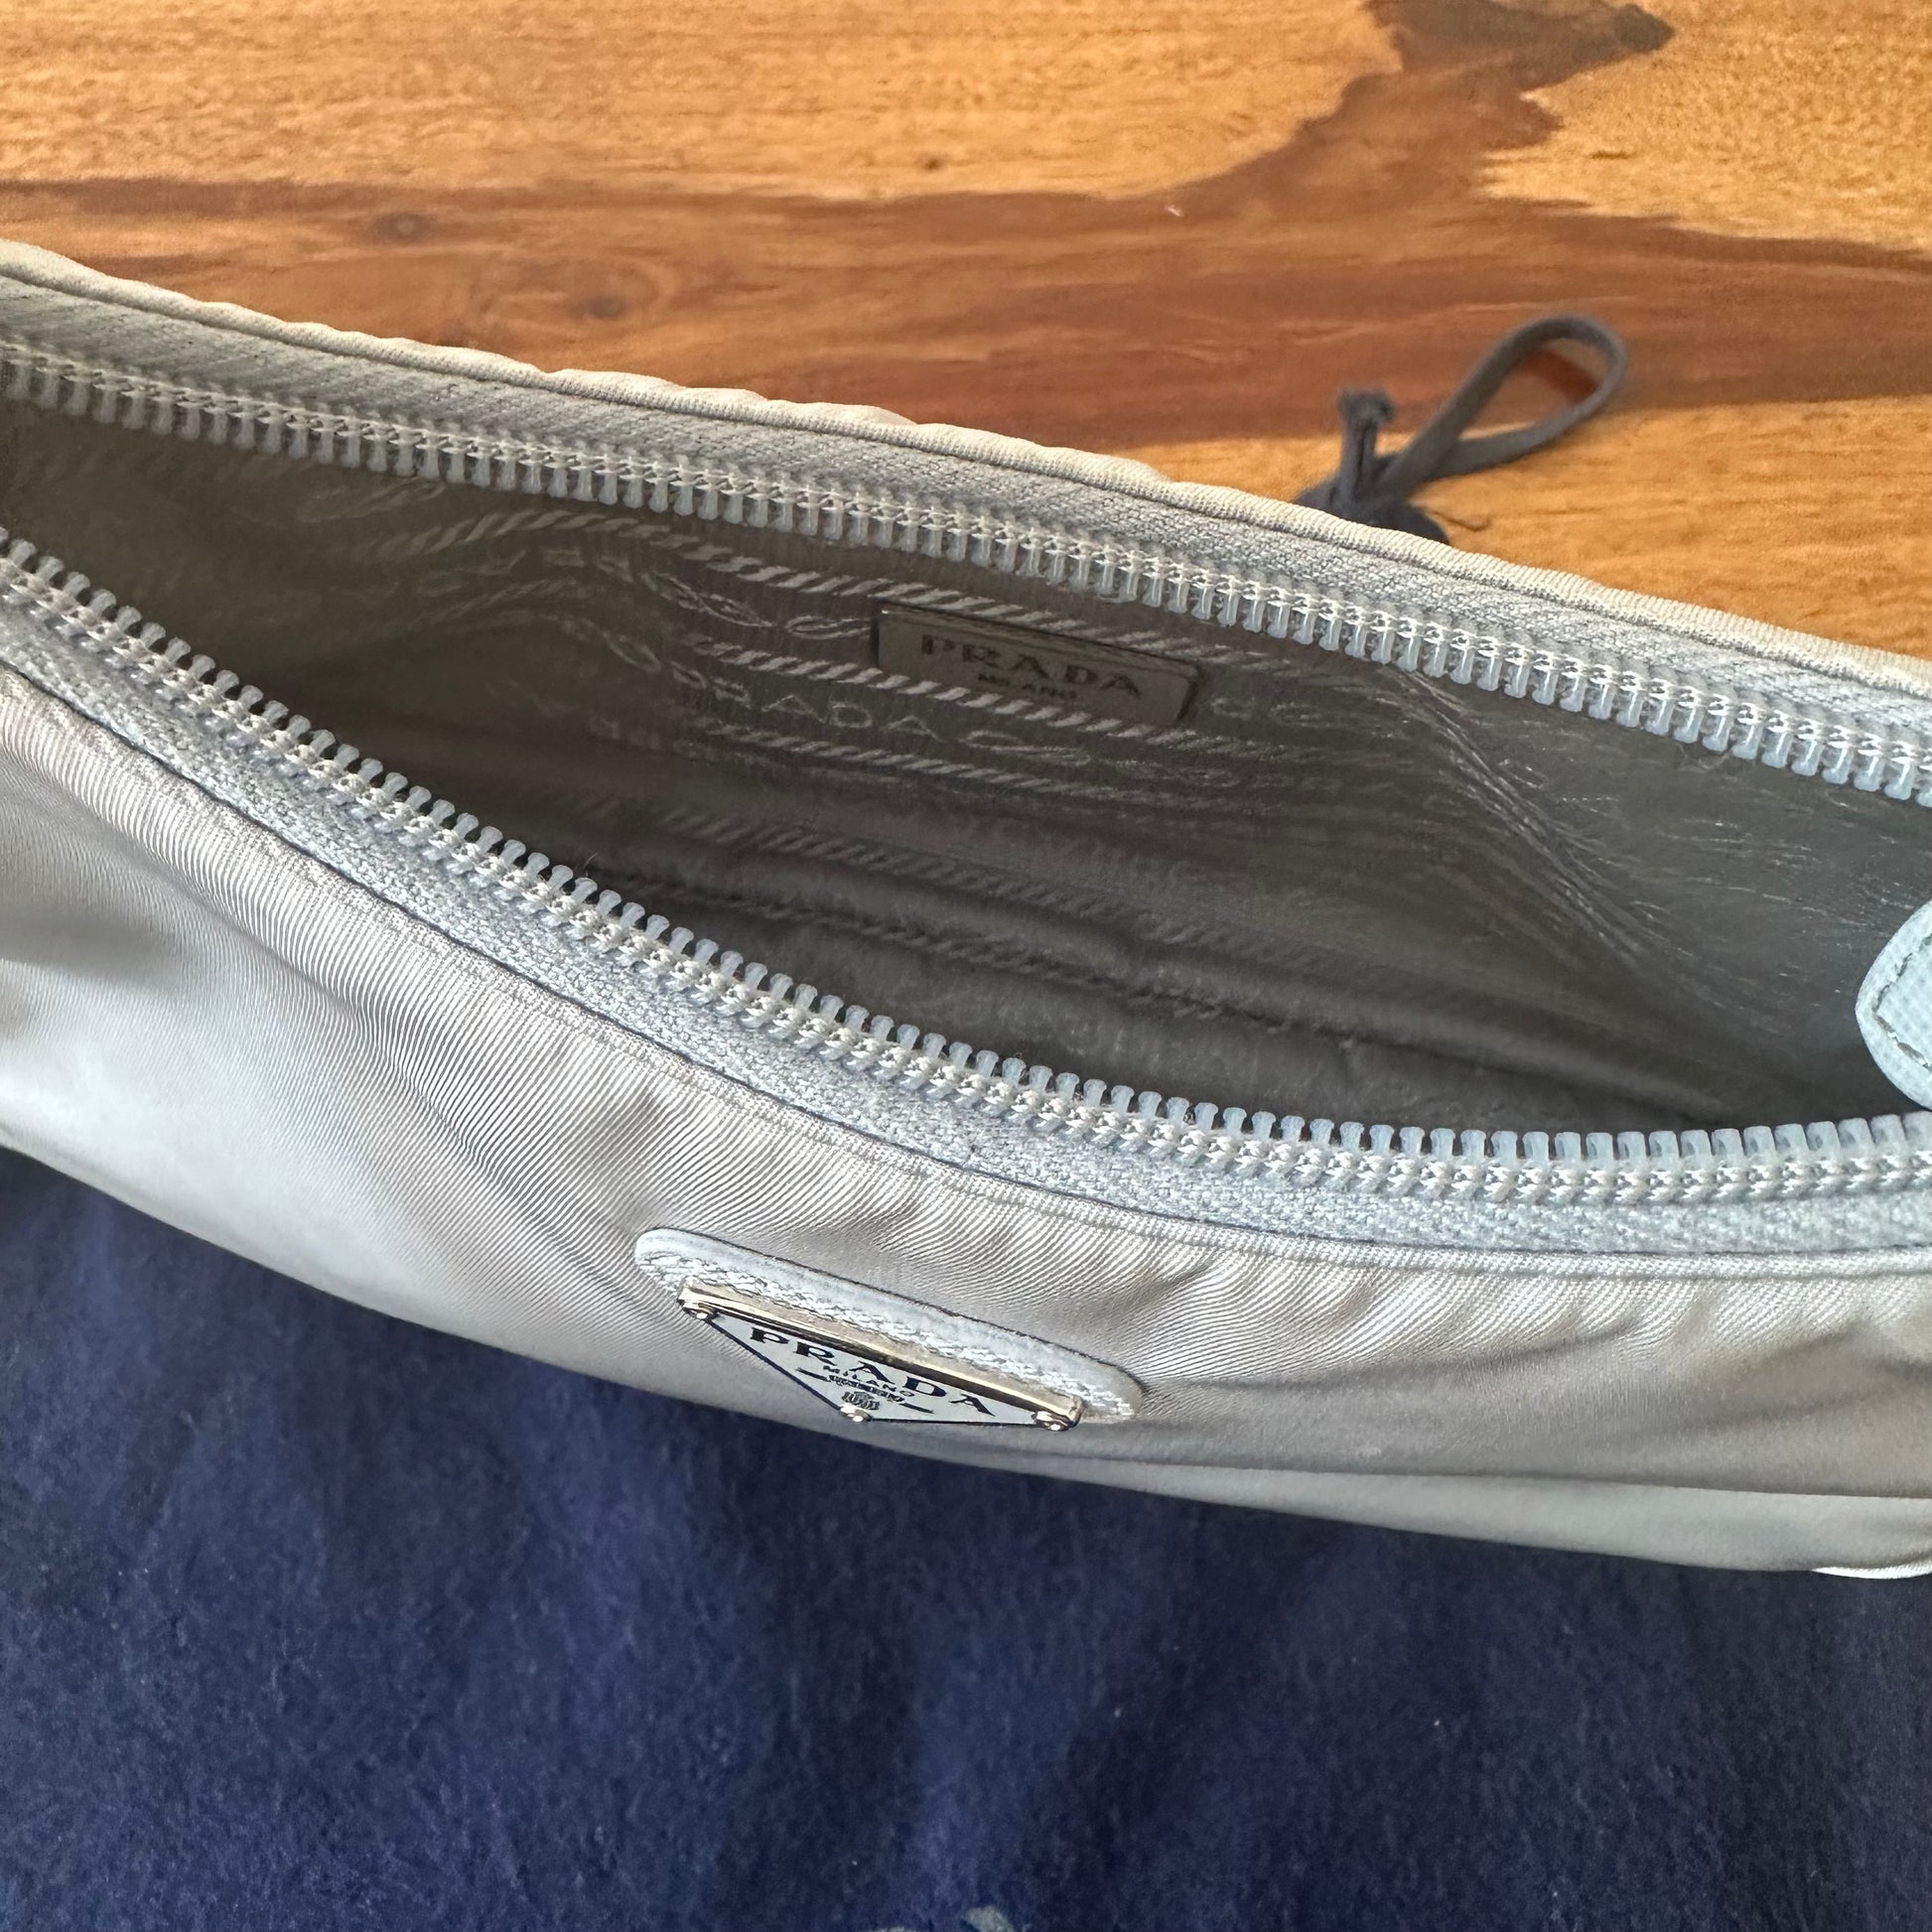 Prada, Bags, Prada Reedition Nylon 205 Bauletto Top Handle Bag